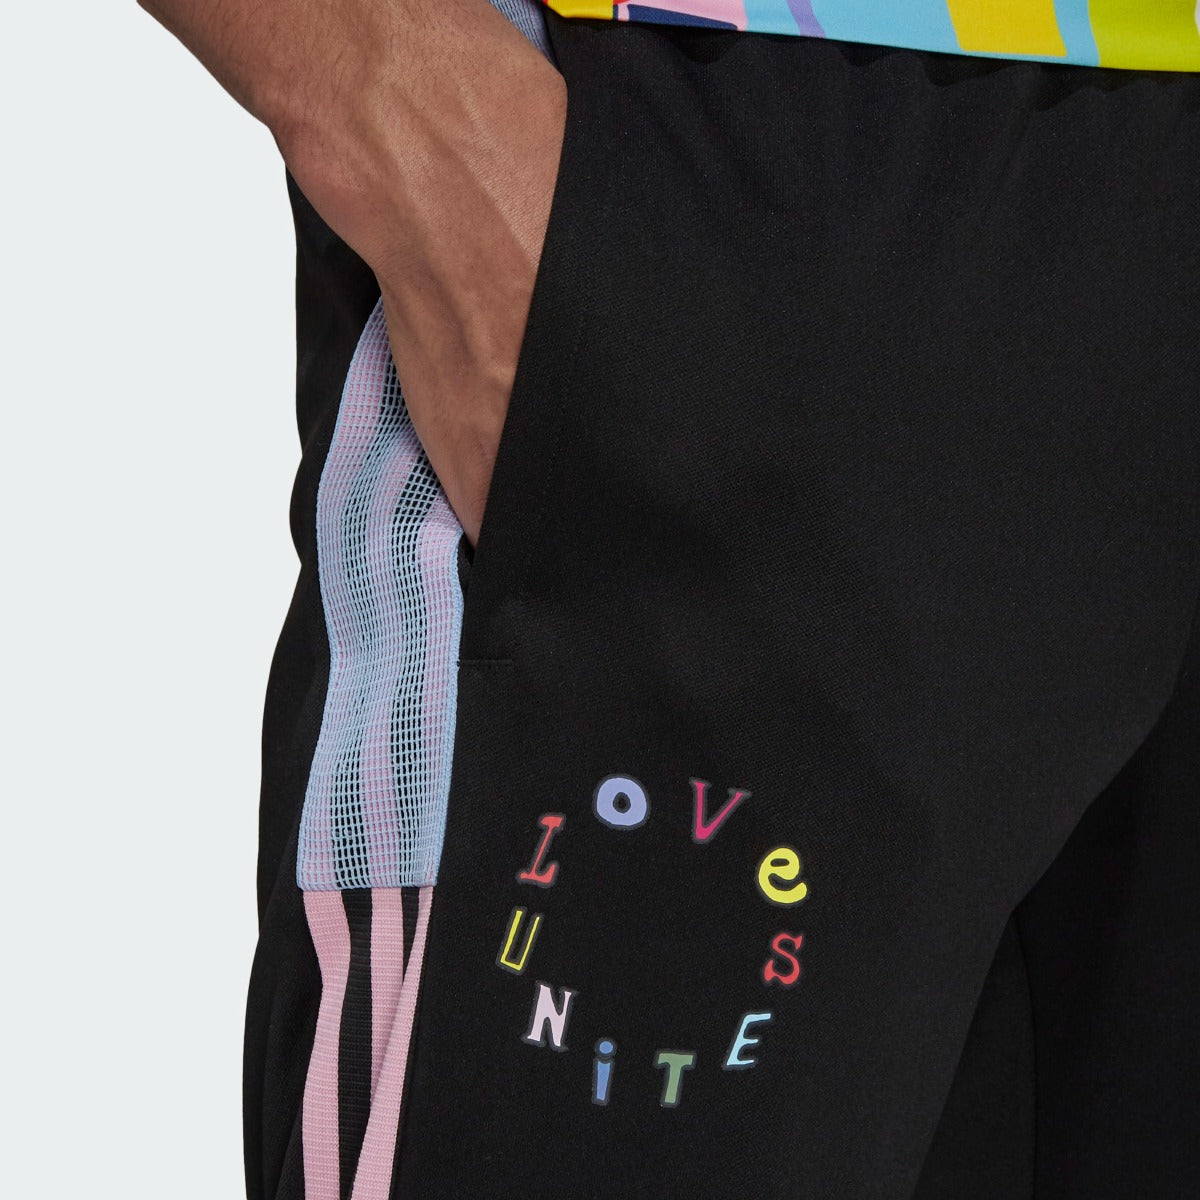 Adidas Love Unites Tiro Pants - Black (Detail 1)